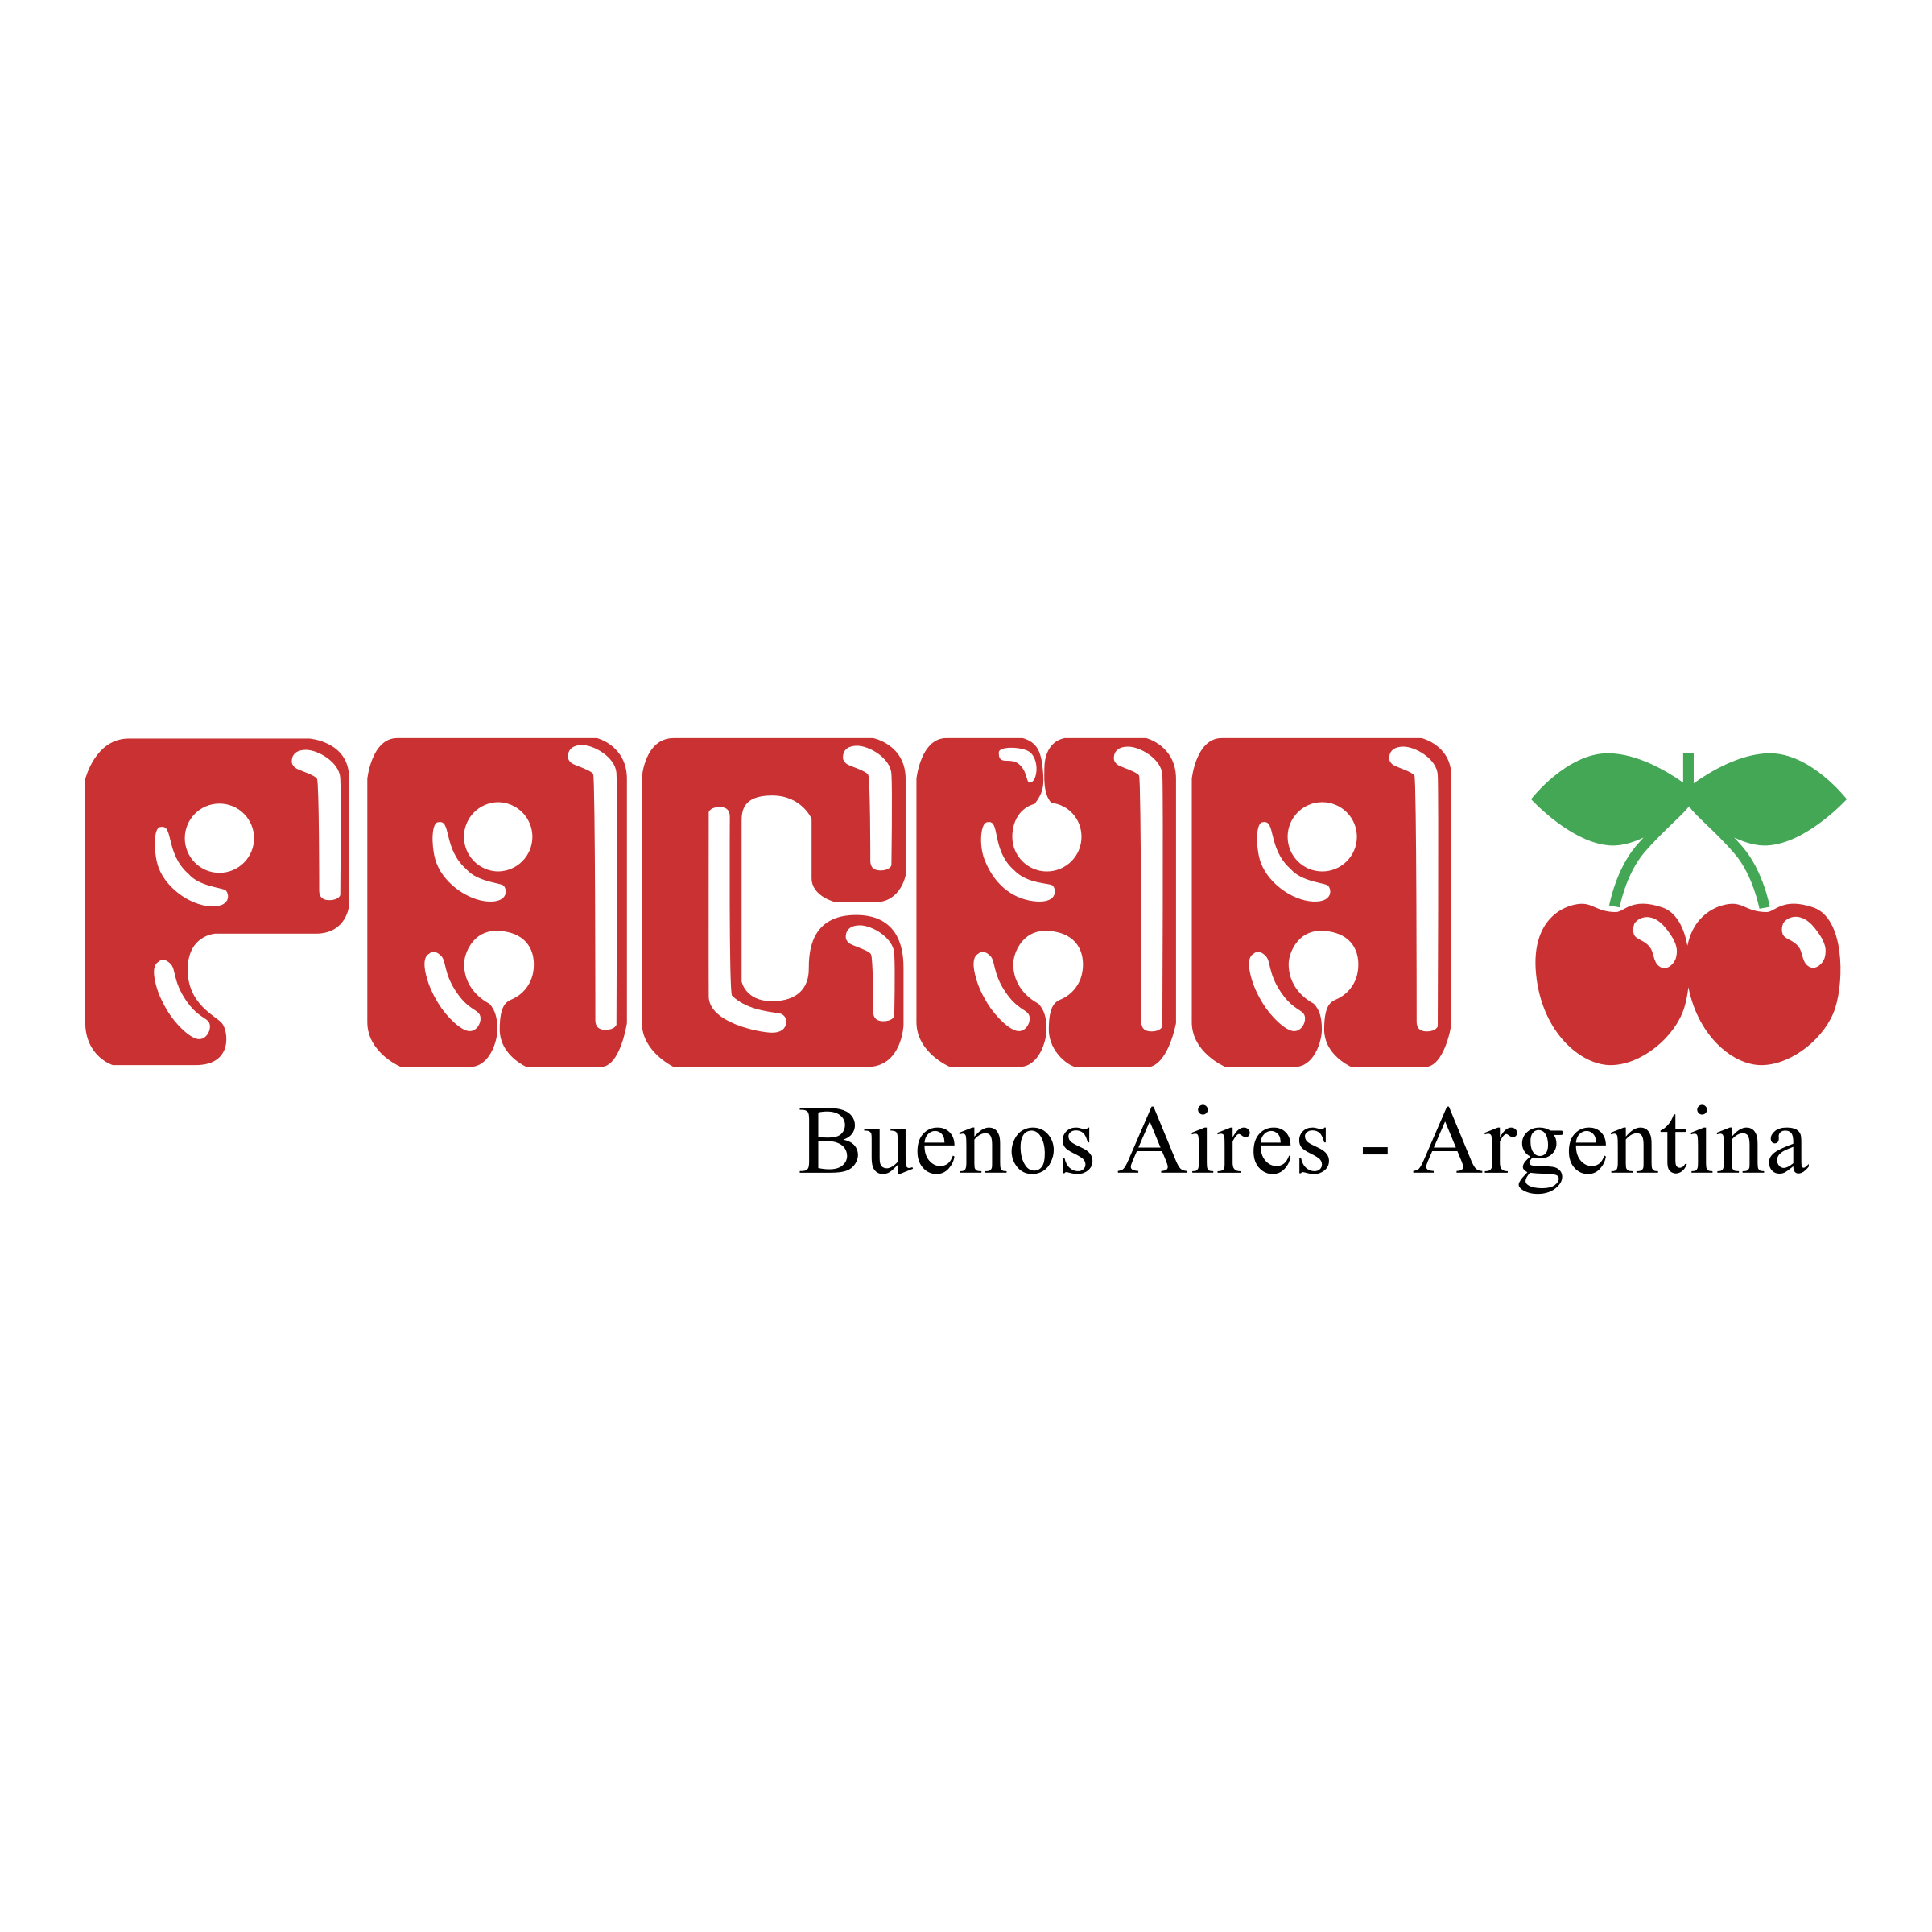 Pacha Logo - Pacha Logo PNG Transparent & SVG Vector - Freebie Supply